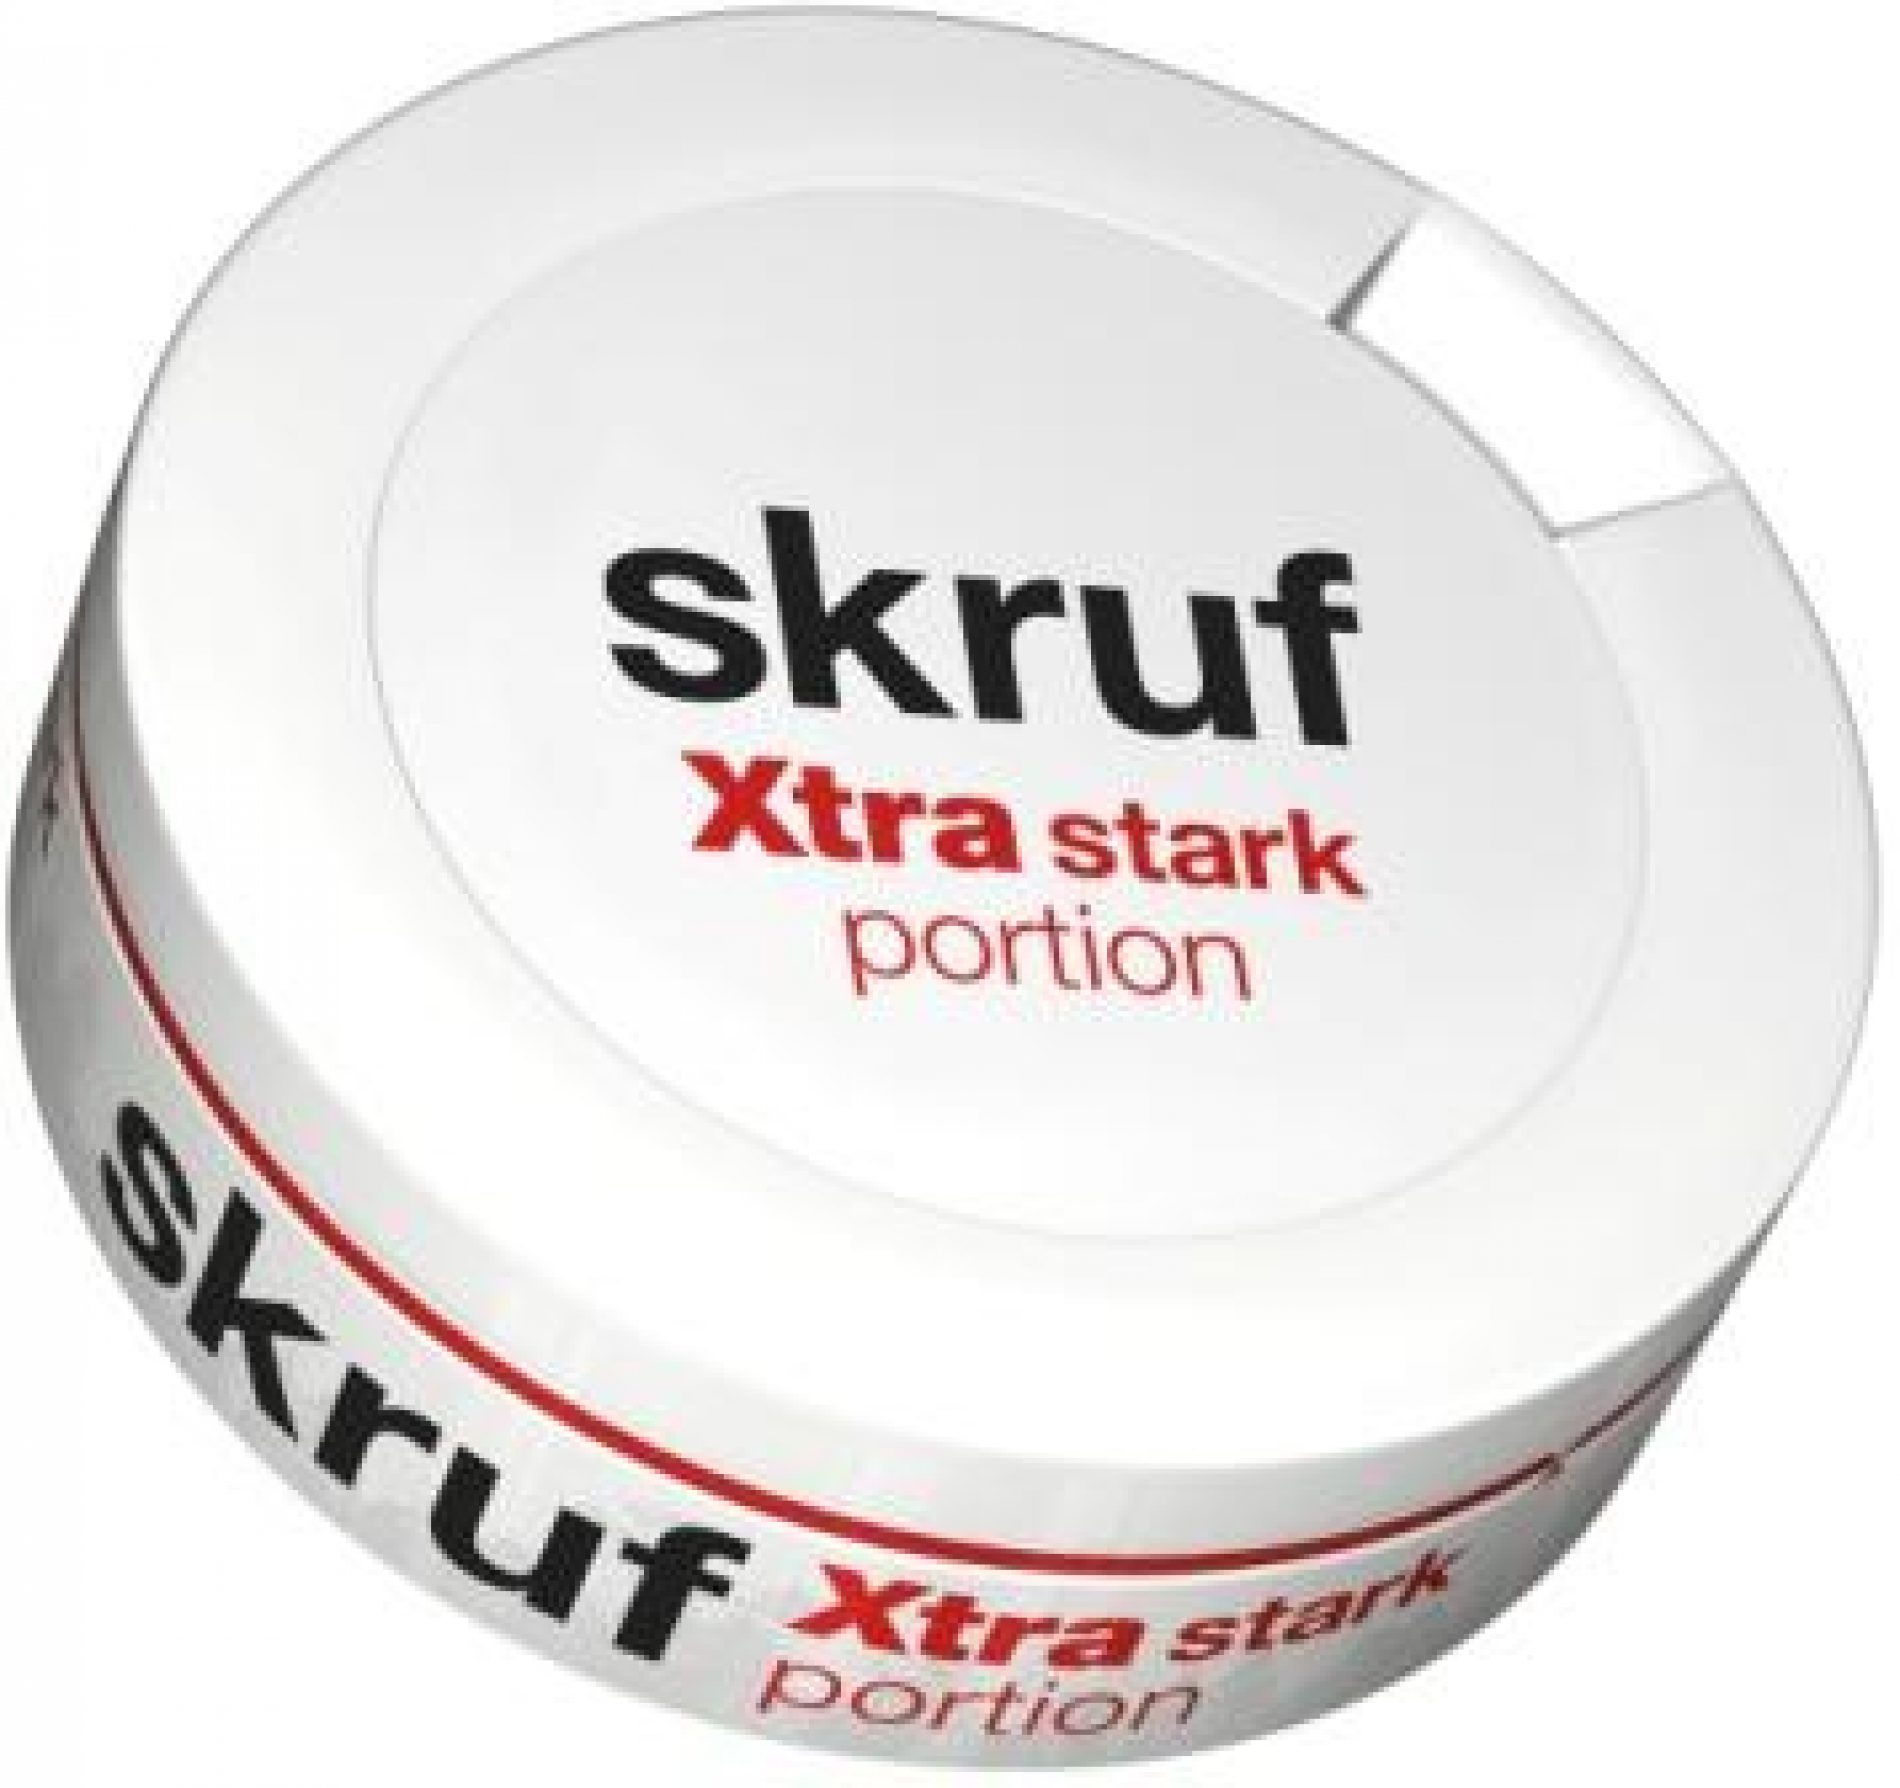 Skruf Snus Launches Xtra Stark snus in Sweden